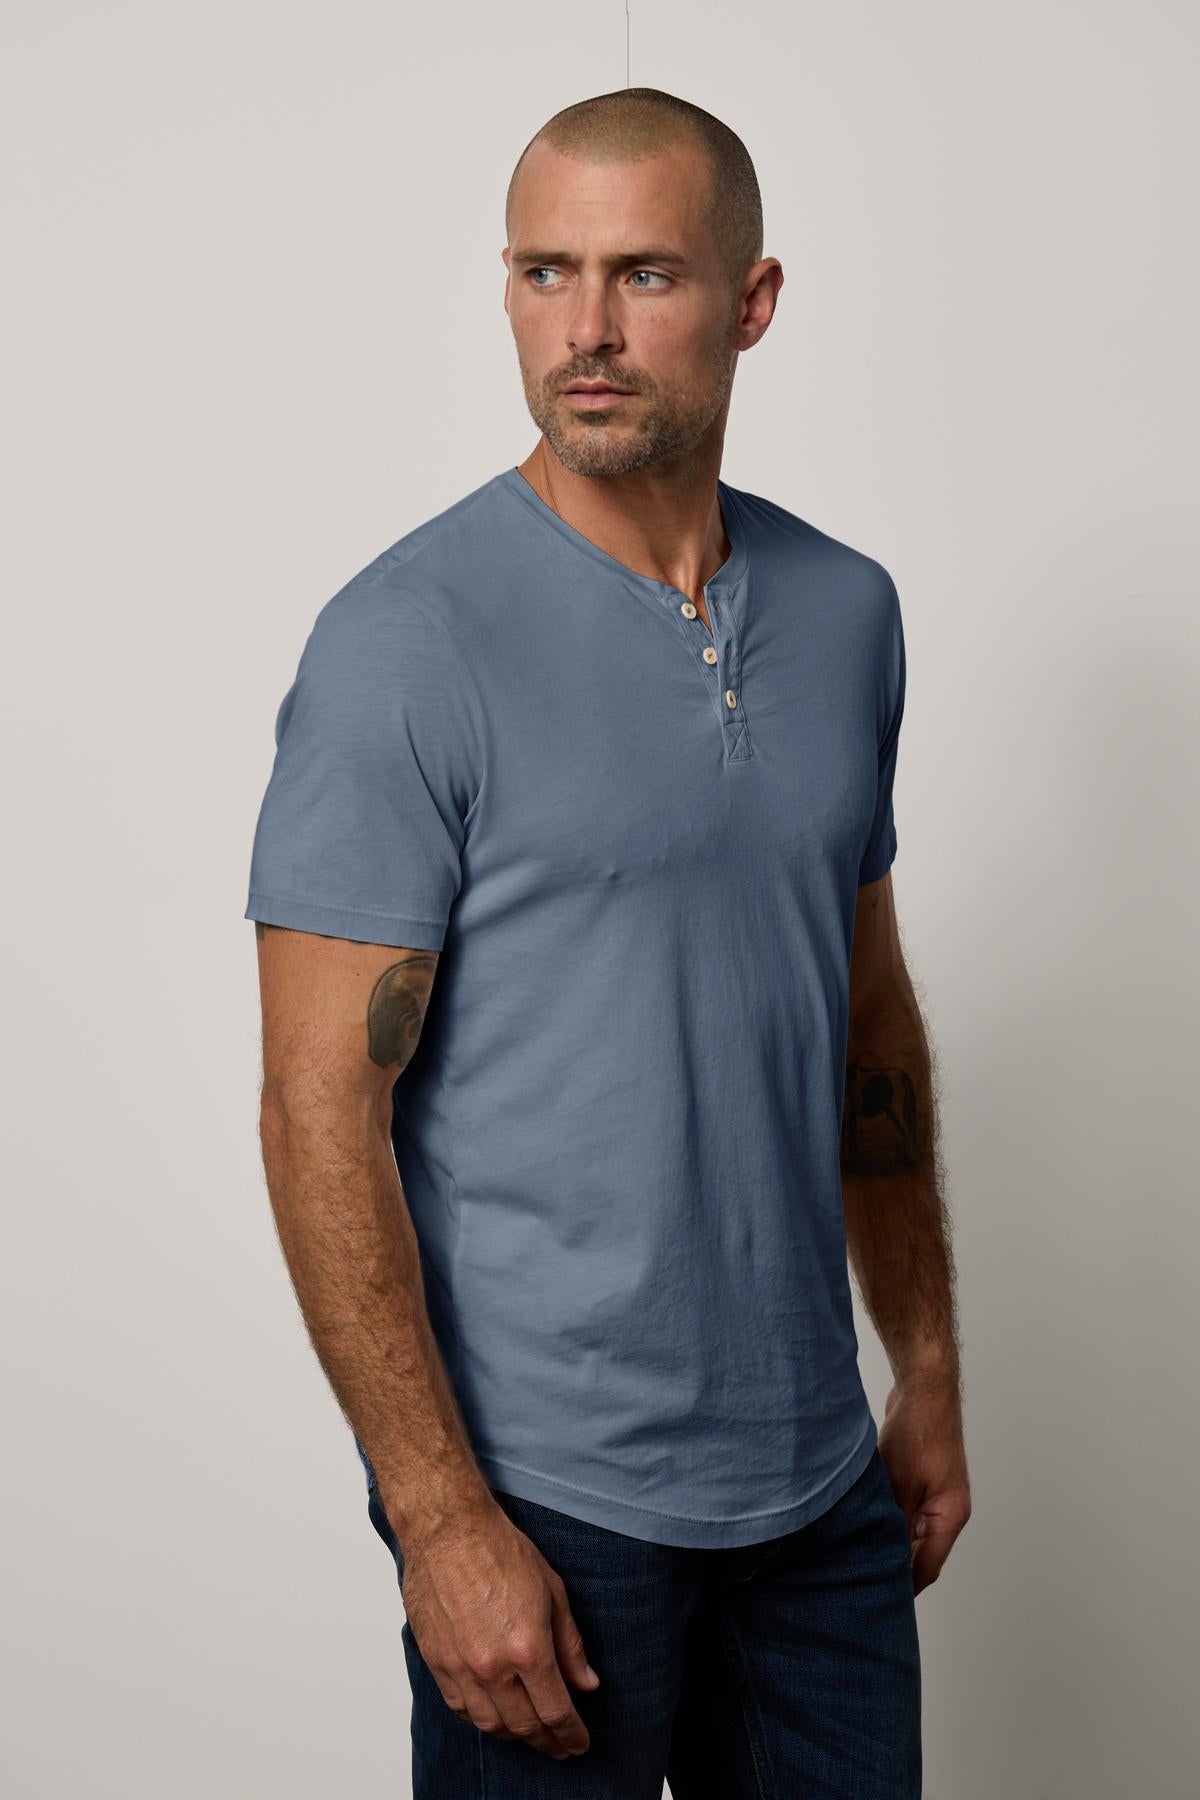 A man wearing a blue Velvet by Graham & Spencer Fulton Short Sleeve Henley t-shirt.-35567477031105